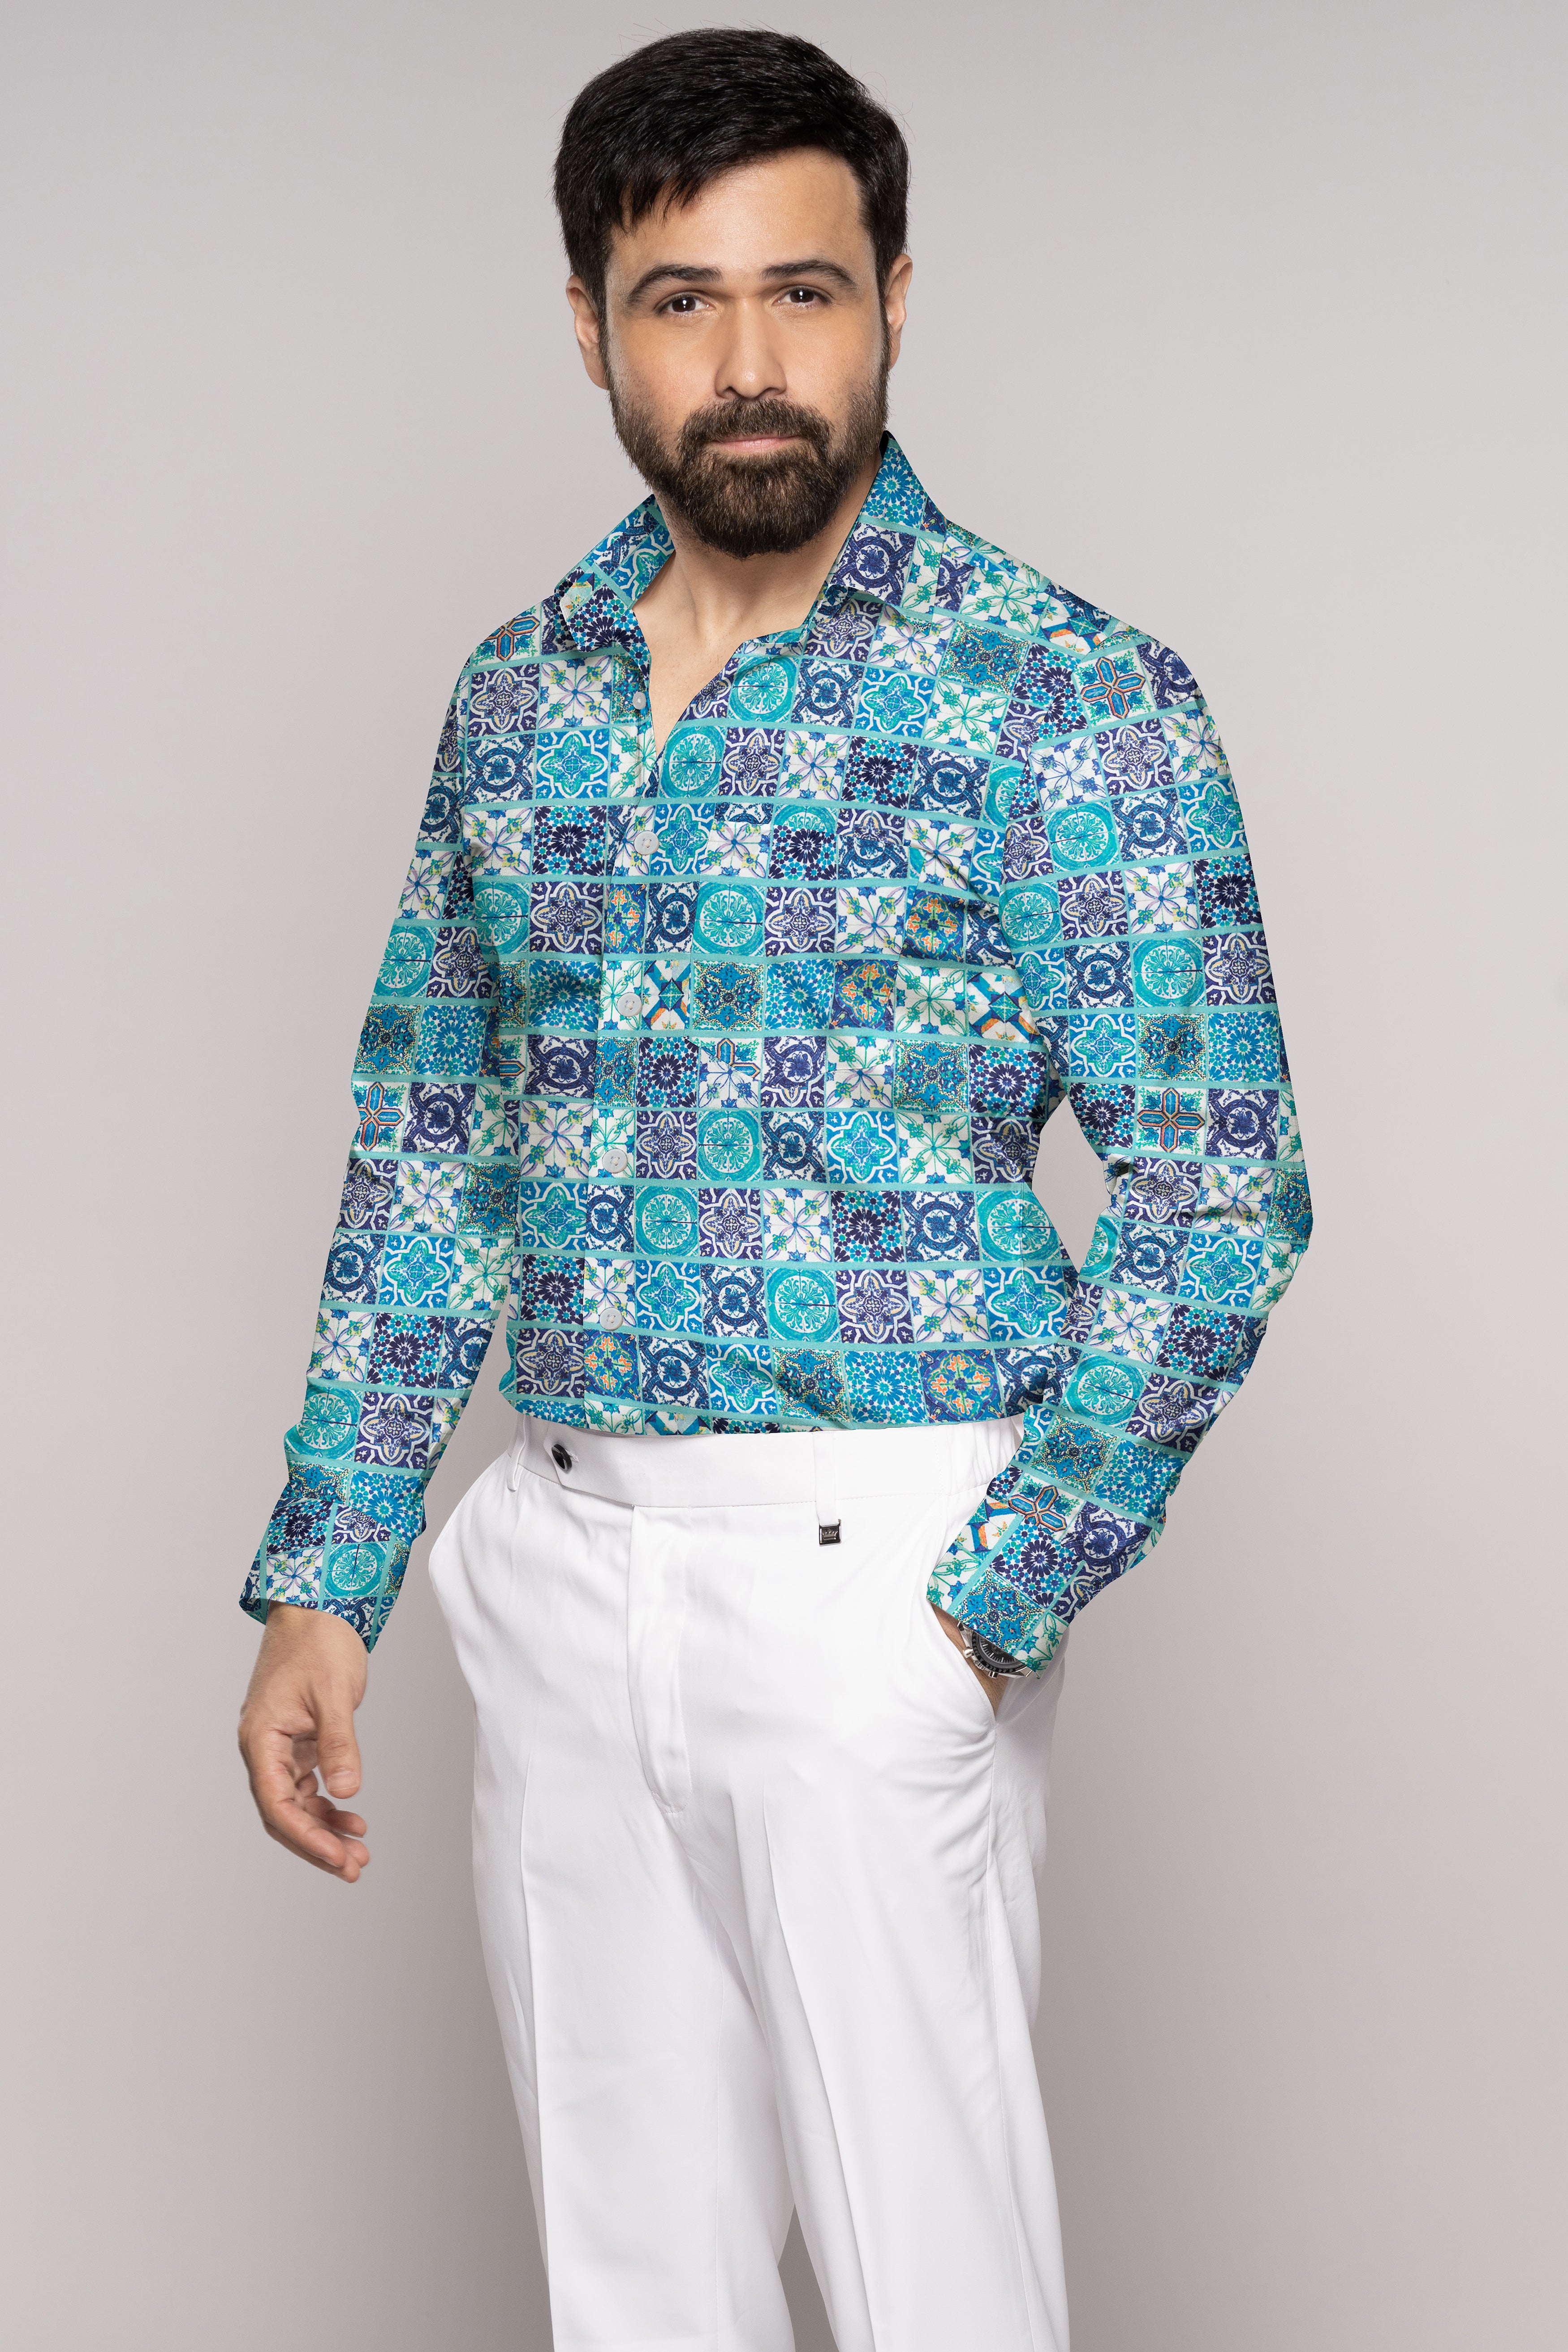 Downy Blue and Mulled Wine Purple Multicolour Tile Printed Subtle Sheen Super Soft Premium Cotton Shirt